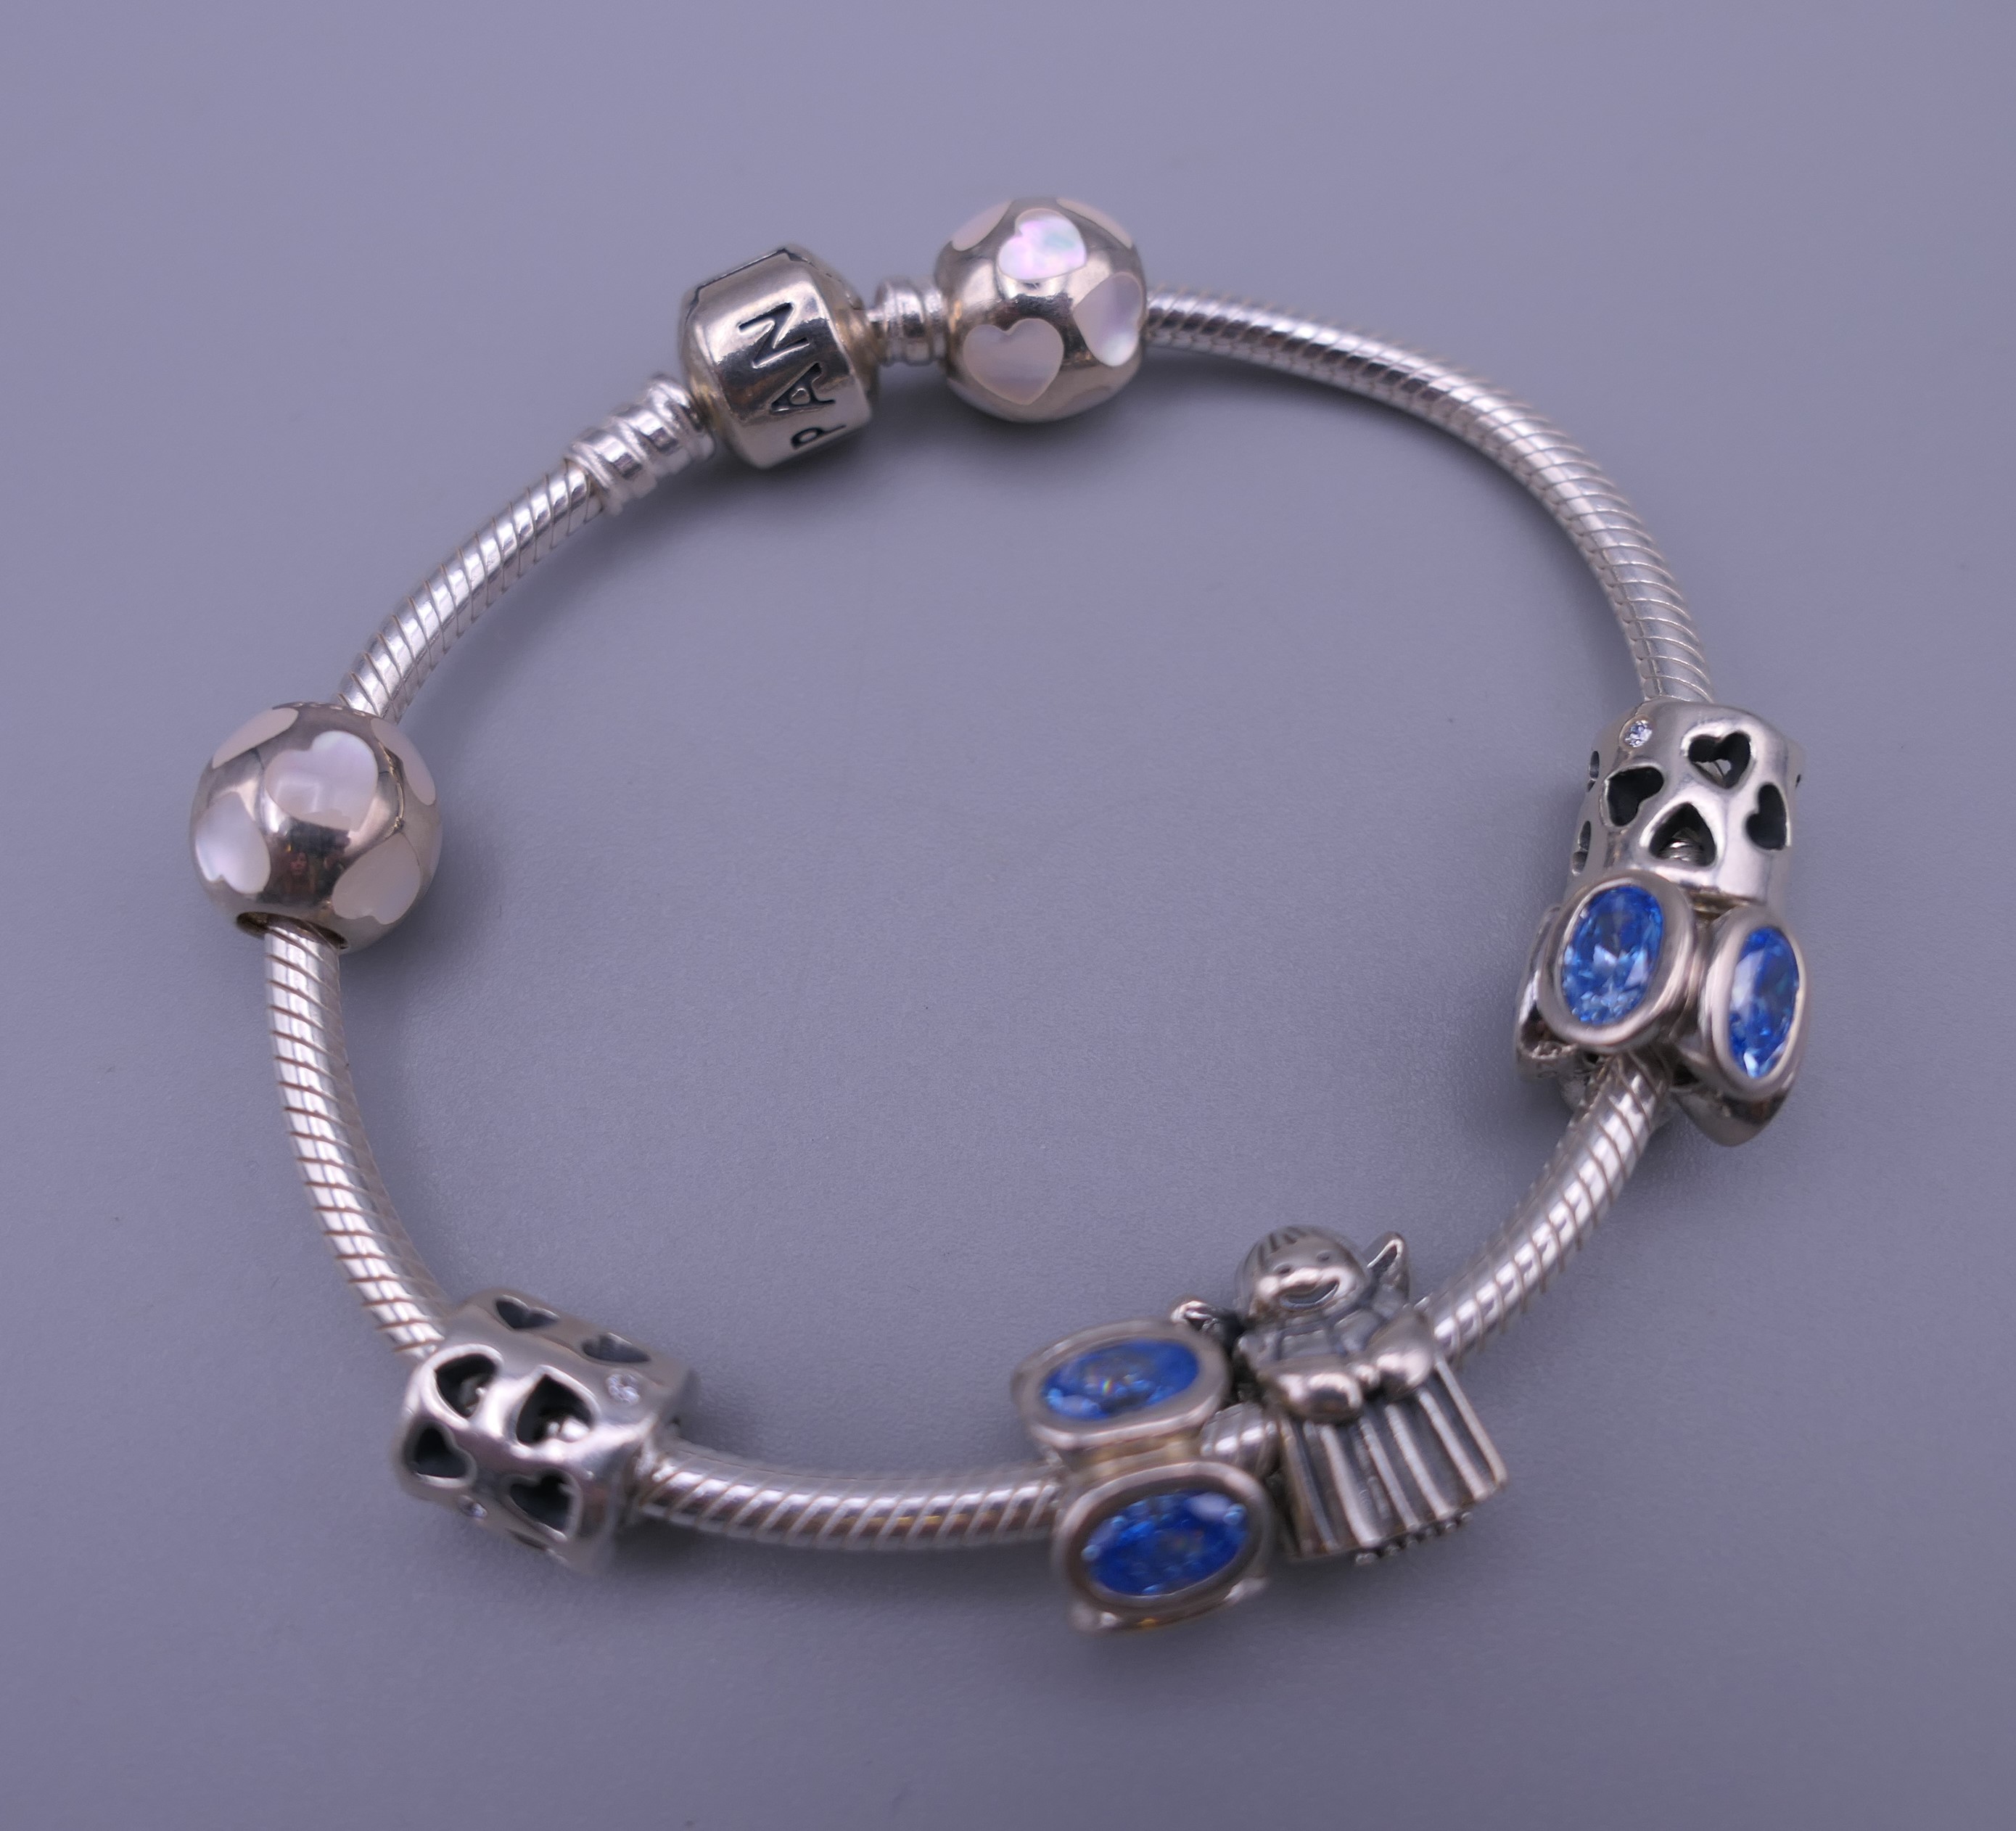 A Pandora silver charm bracelet in a Pandora bag. Approximately 20 cm long. - Image 2 of 4